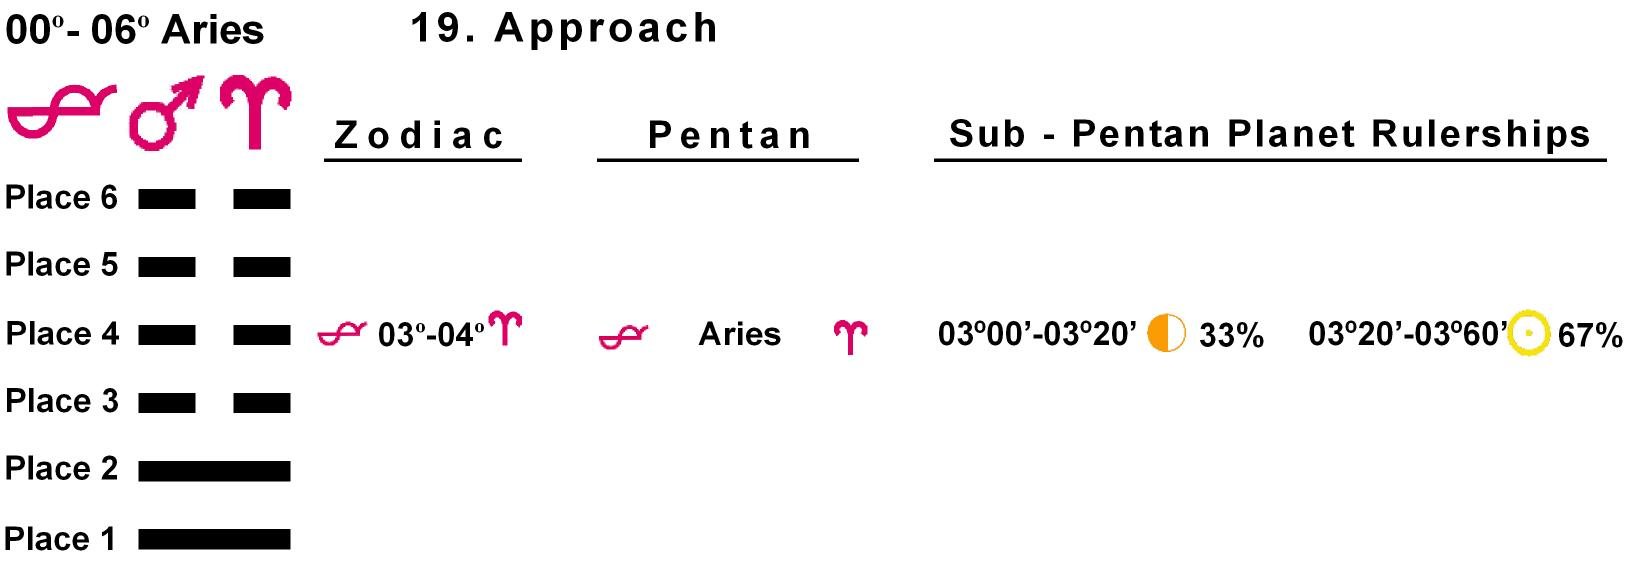 Pent-lines-01AR 03-04 Hx-19 Approach